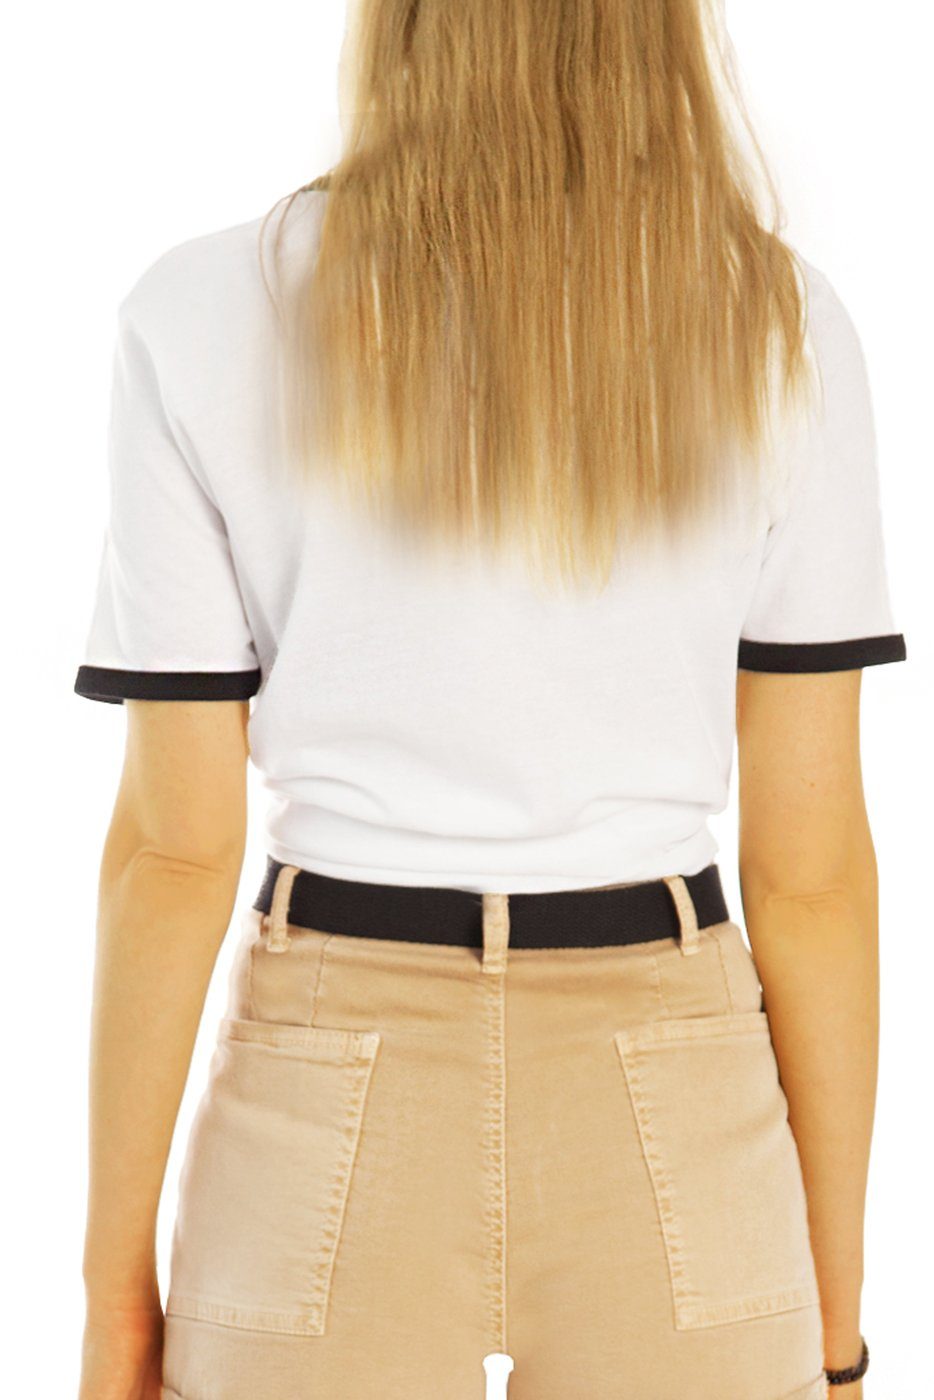 Gürtel Hosen - mit j14e mit be - Shorts Hotpants Stretchanteil styled Gürtel, kurze mit Shorts Damen weiß